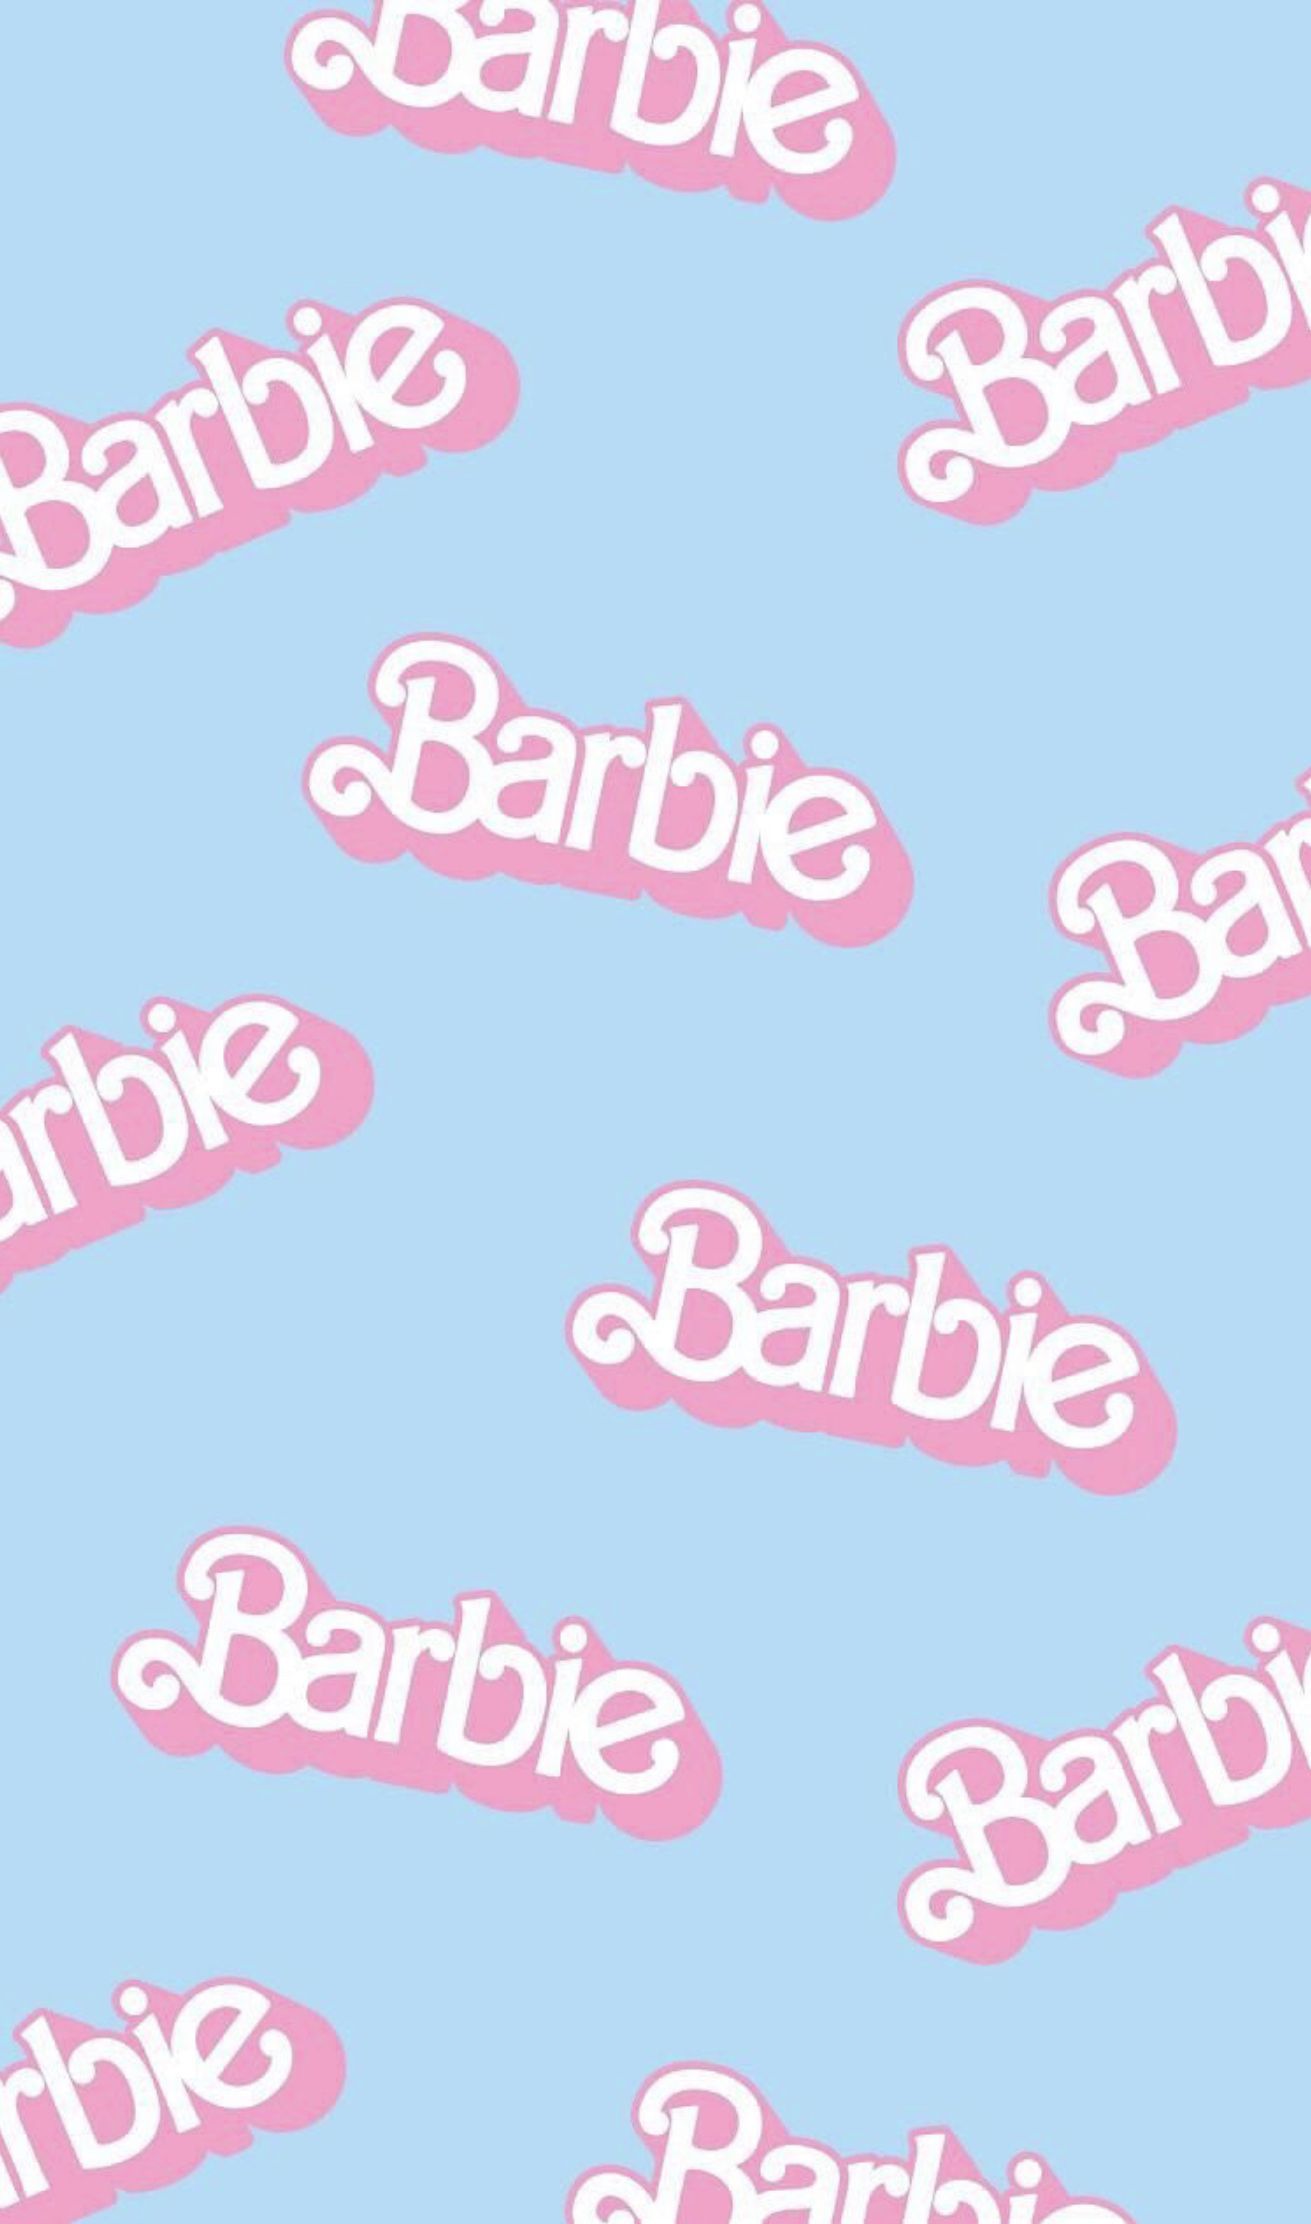 Barbie Aesthetic Wallpapers - Wallpaper Cave